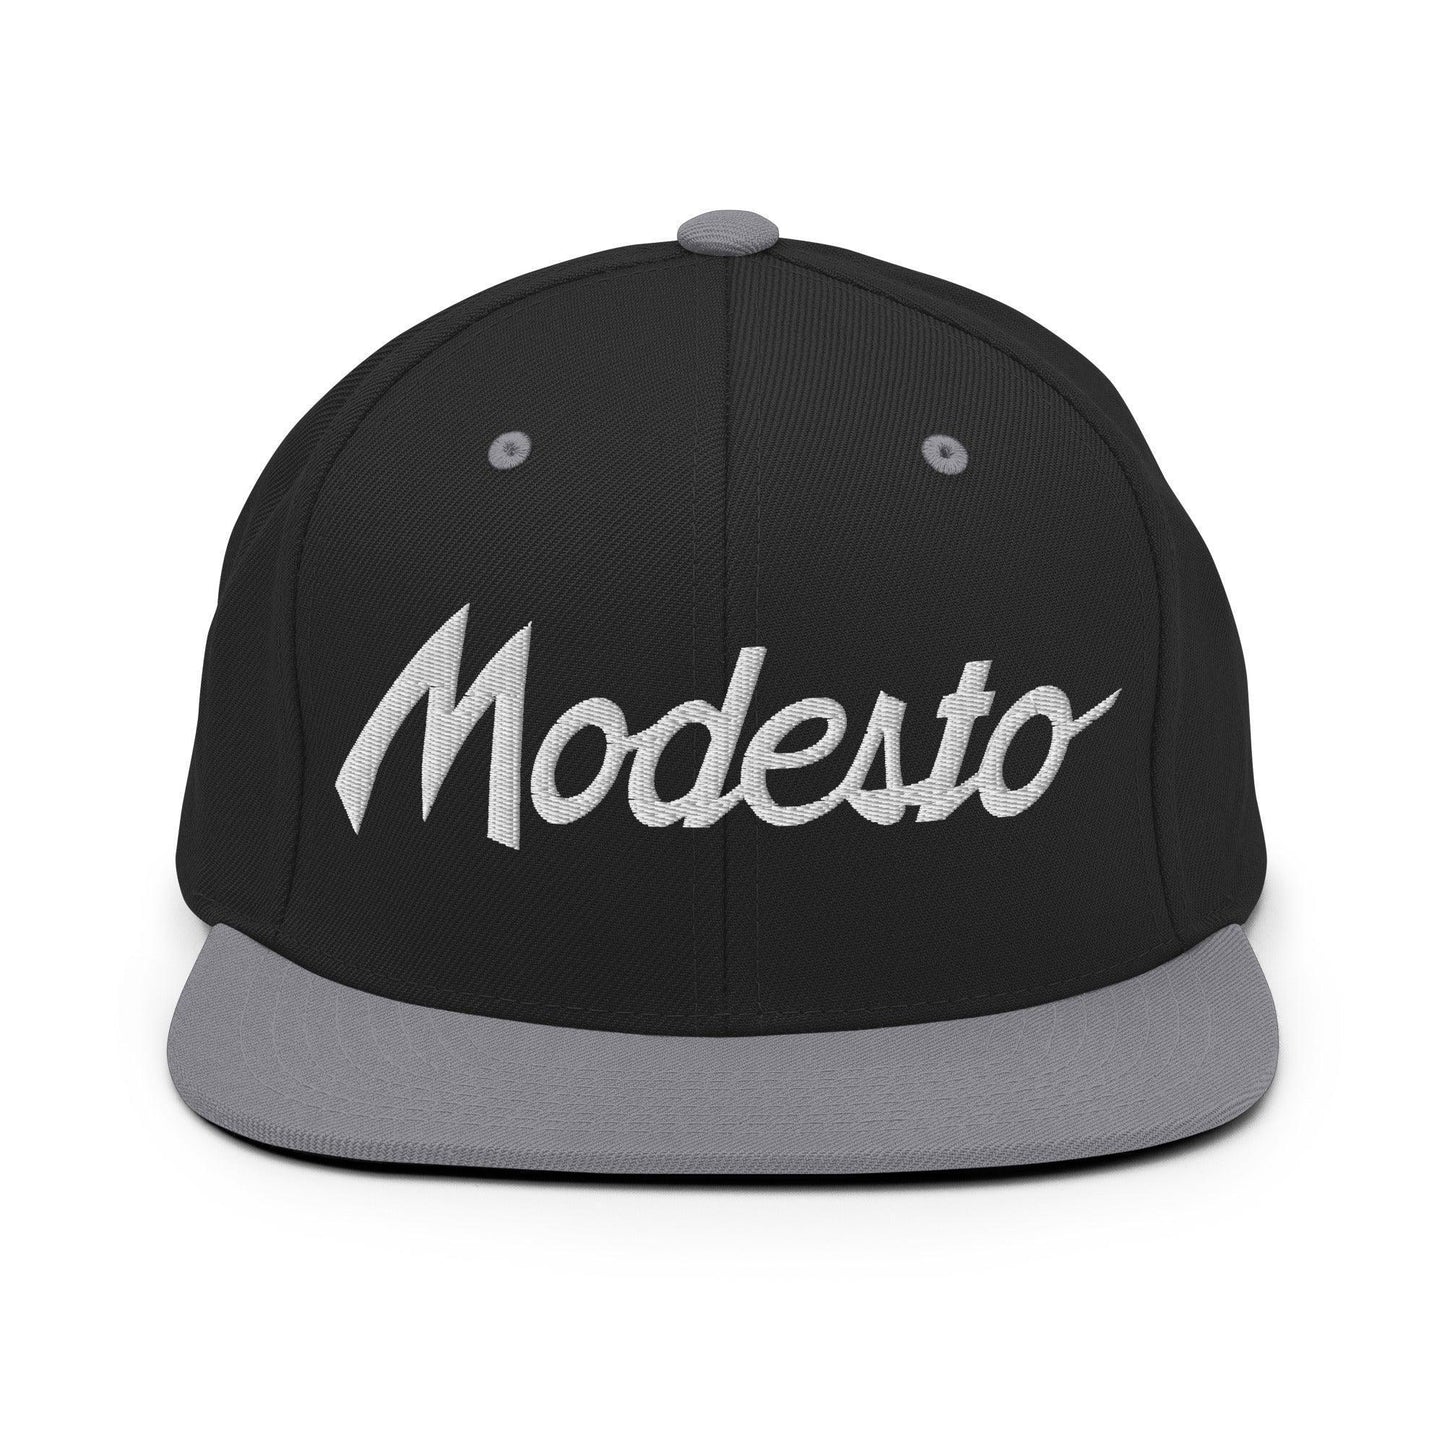 Modesto Script Snapback Hat Black Silver